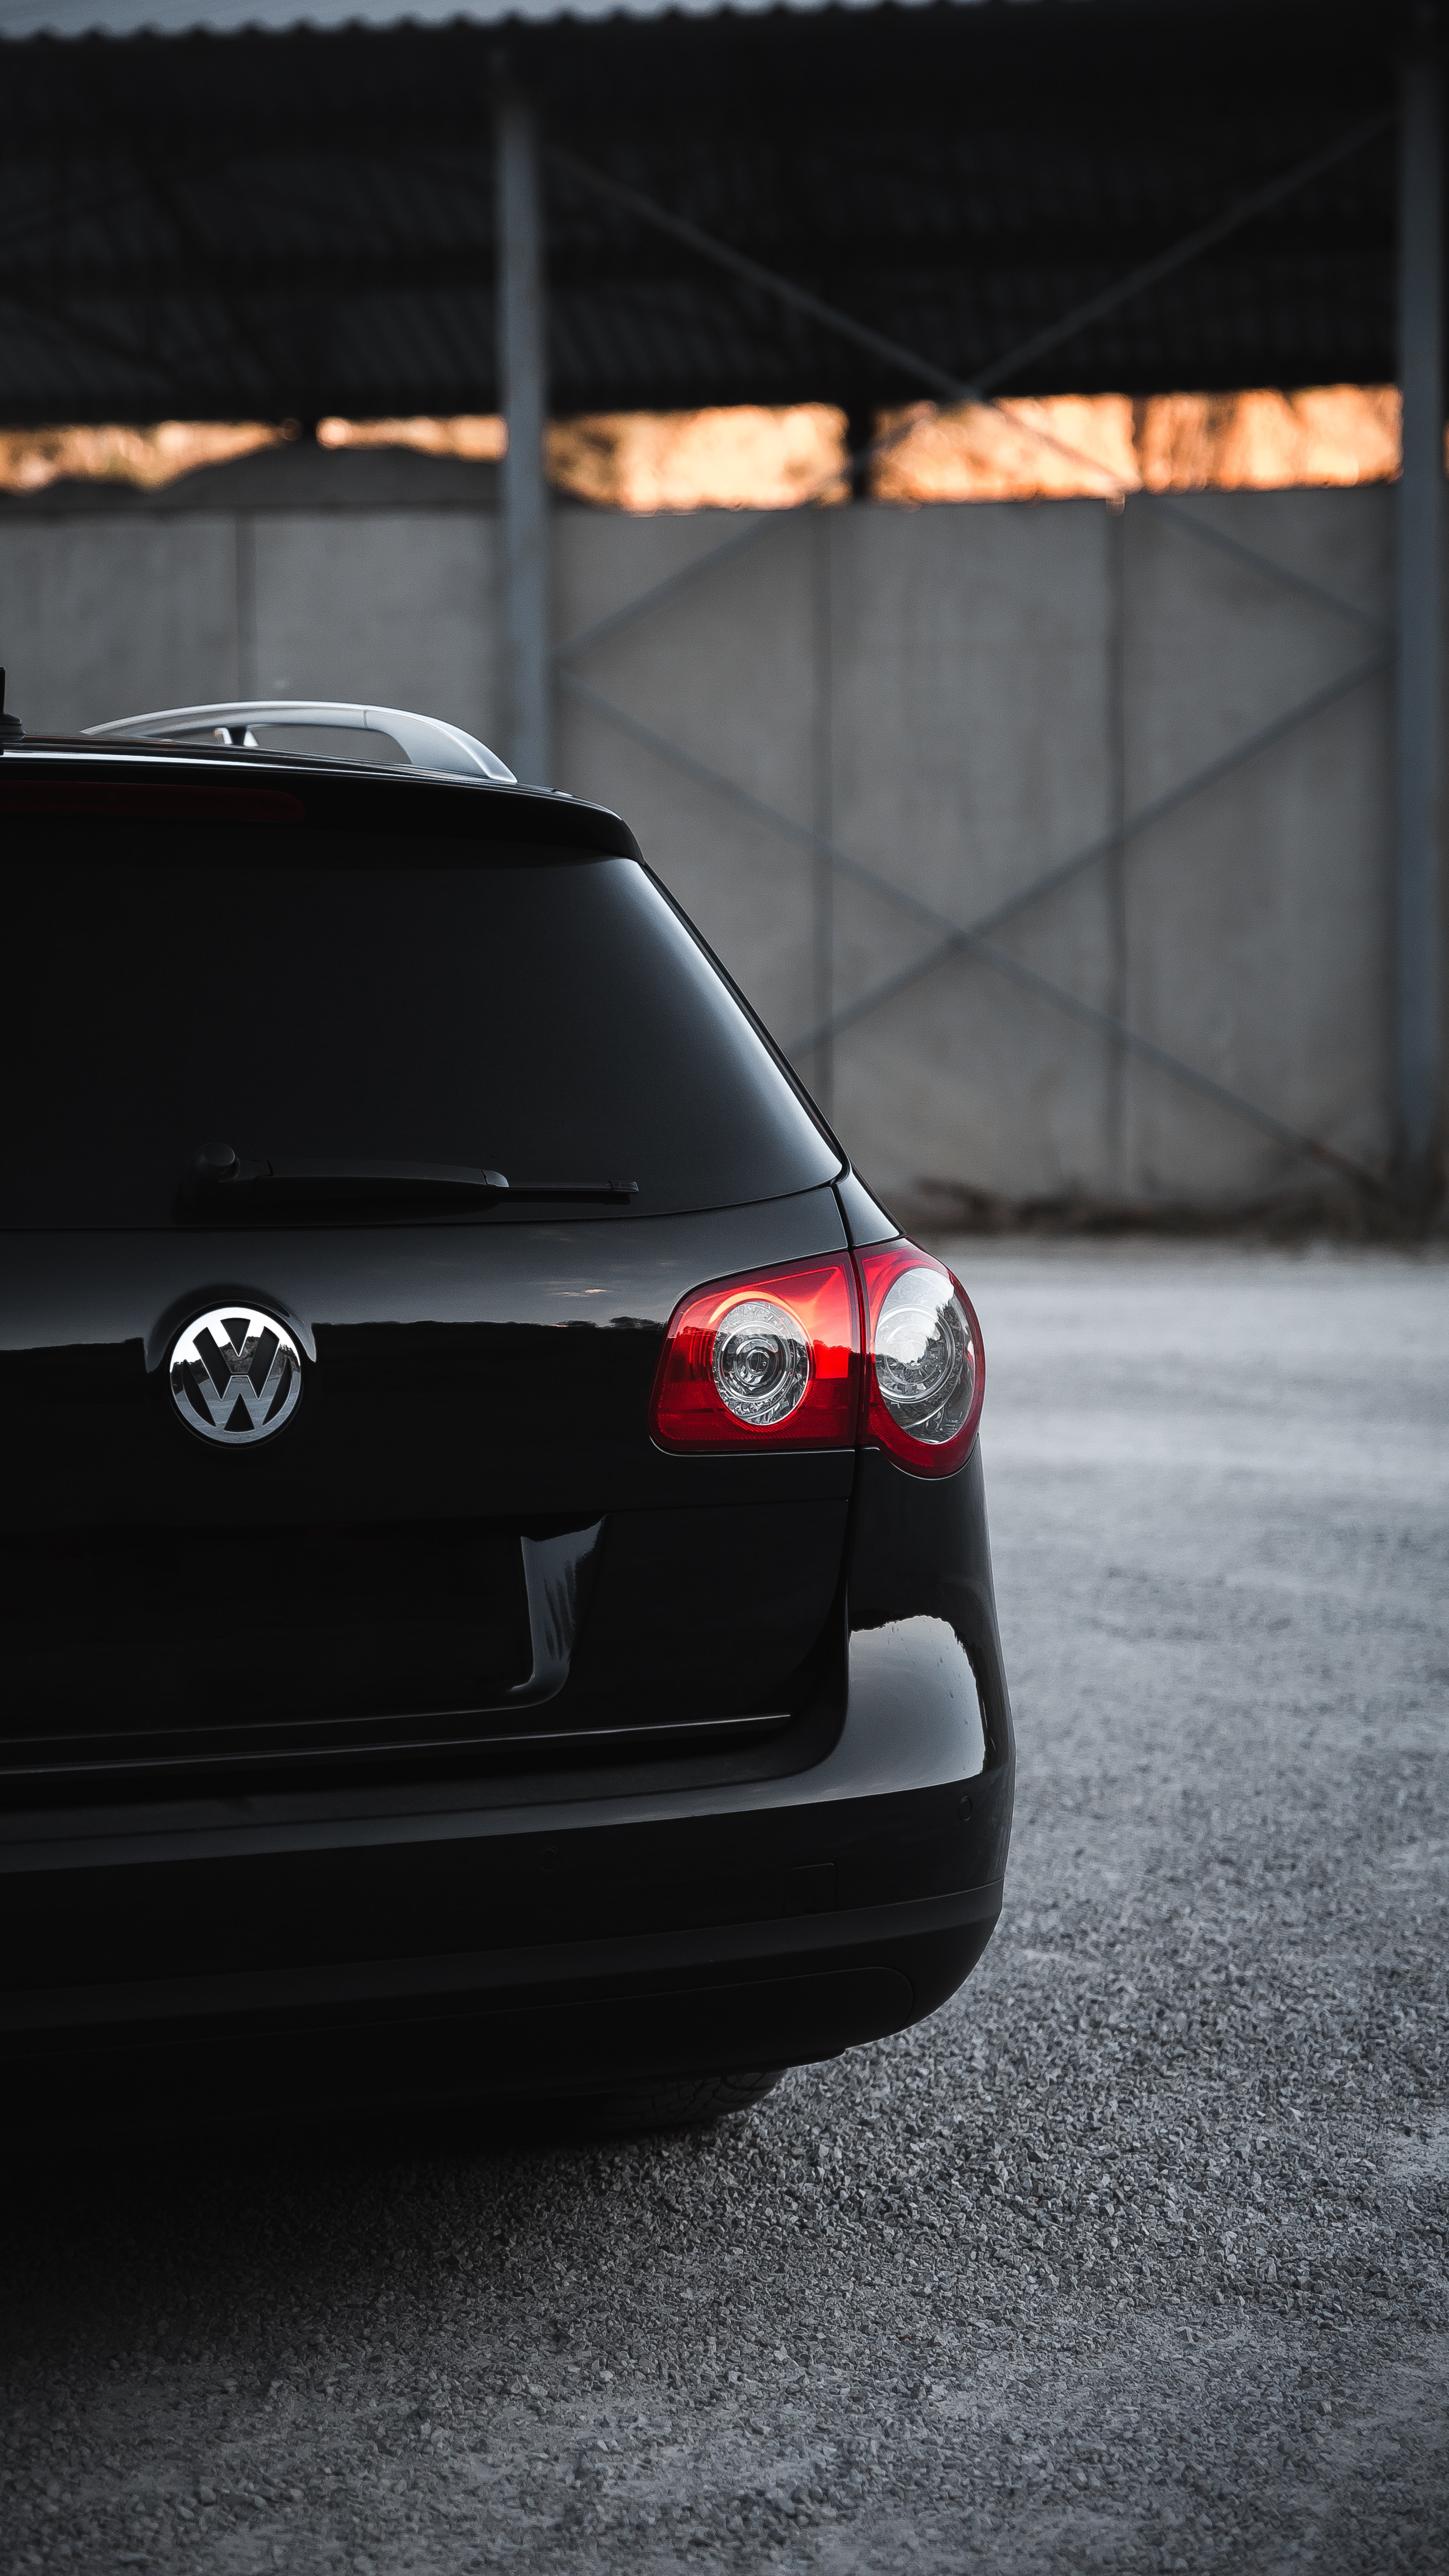 Télécharger des fonds d'écran Volkswagen Golf V HD